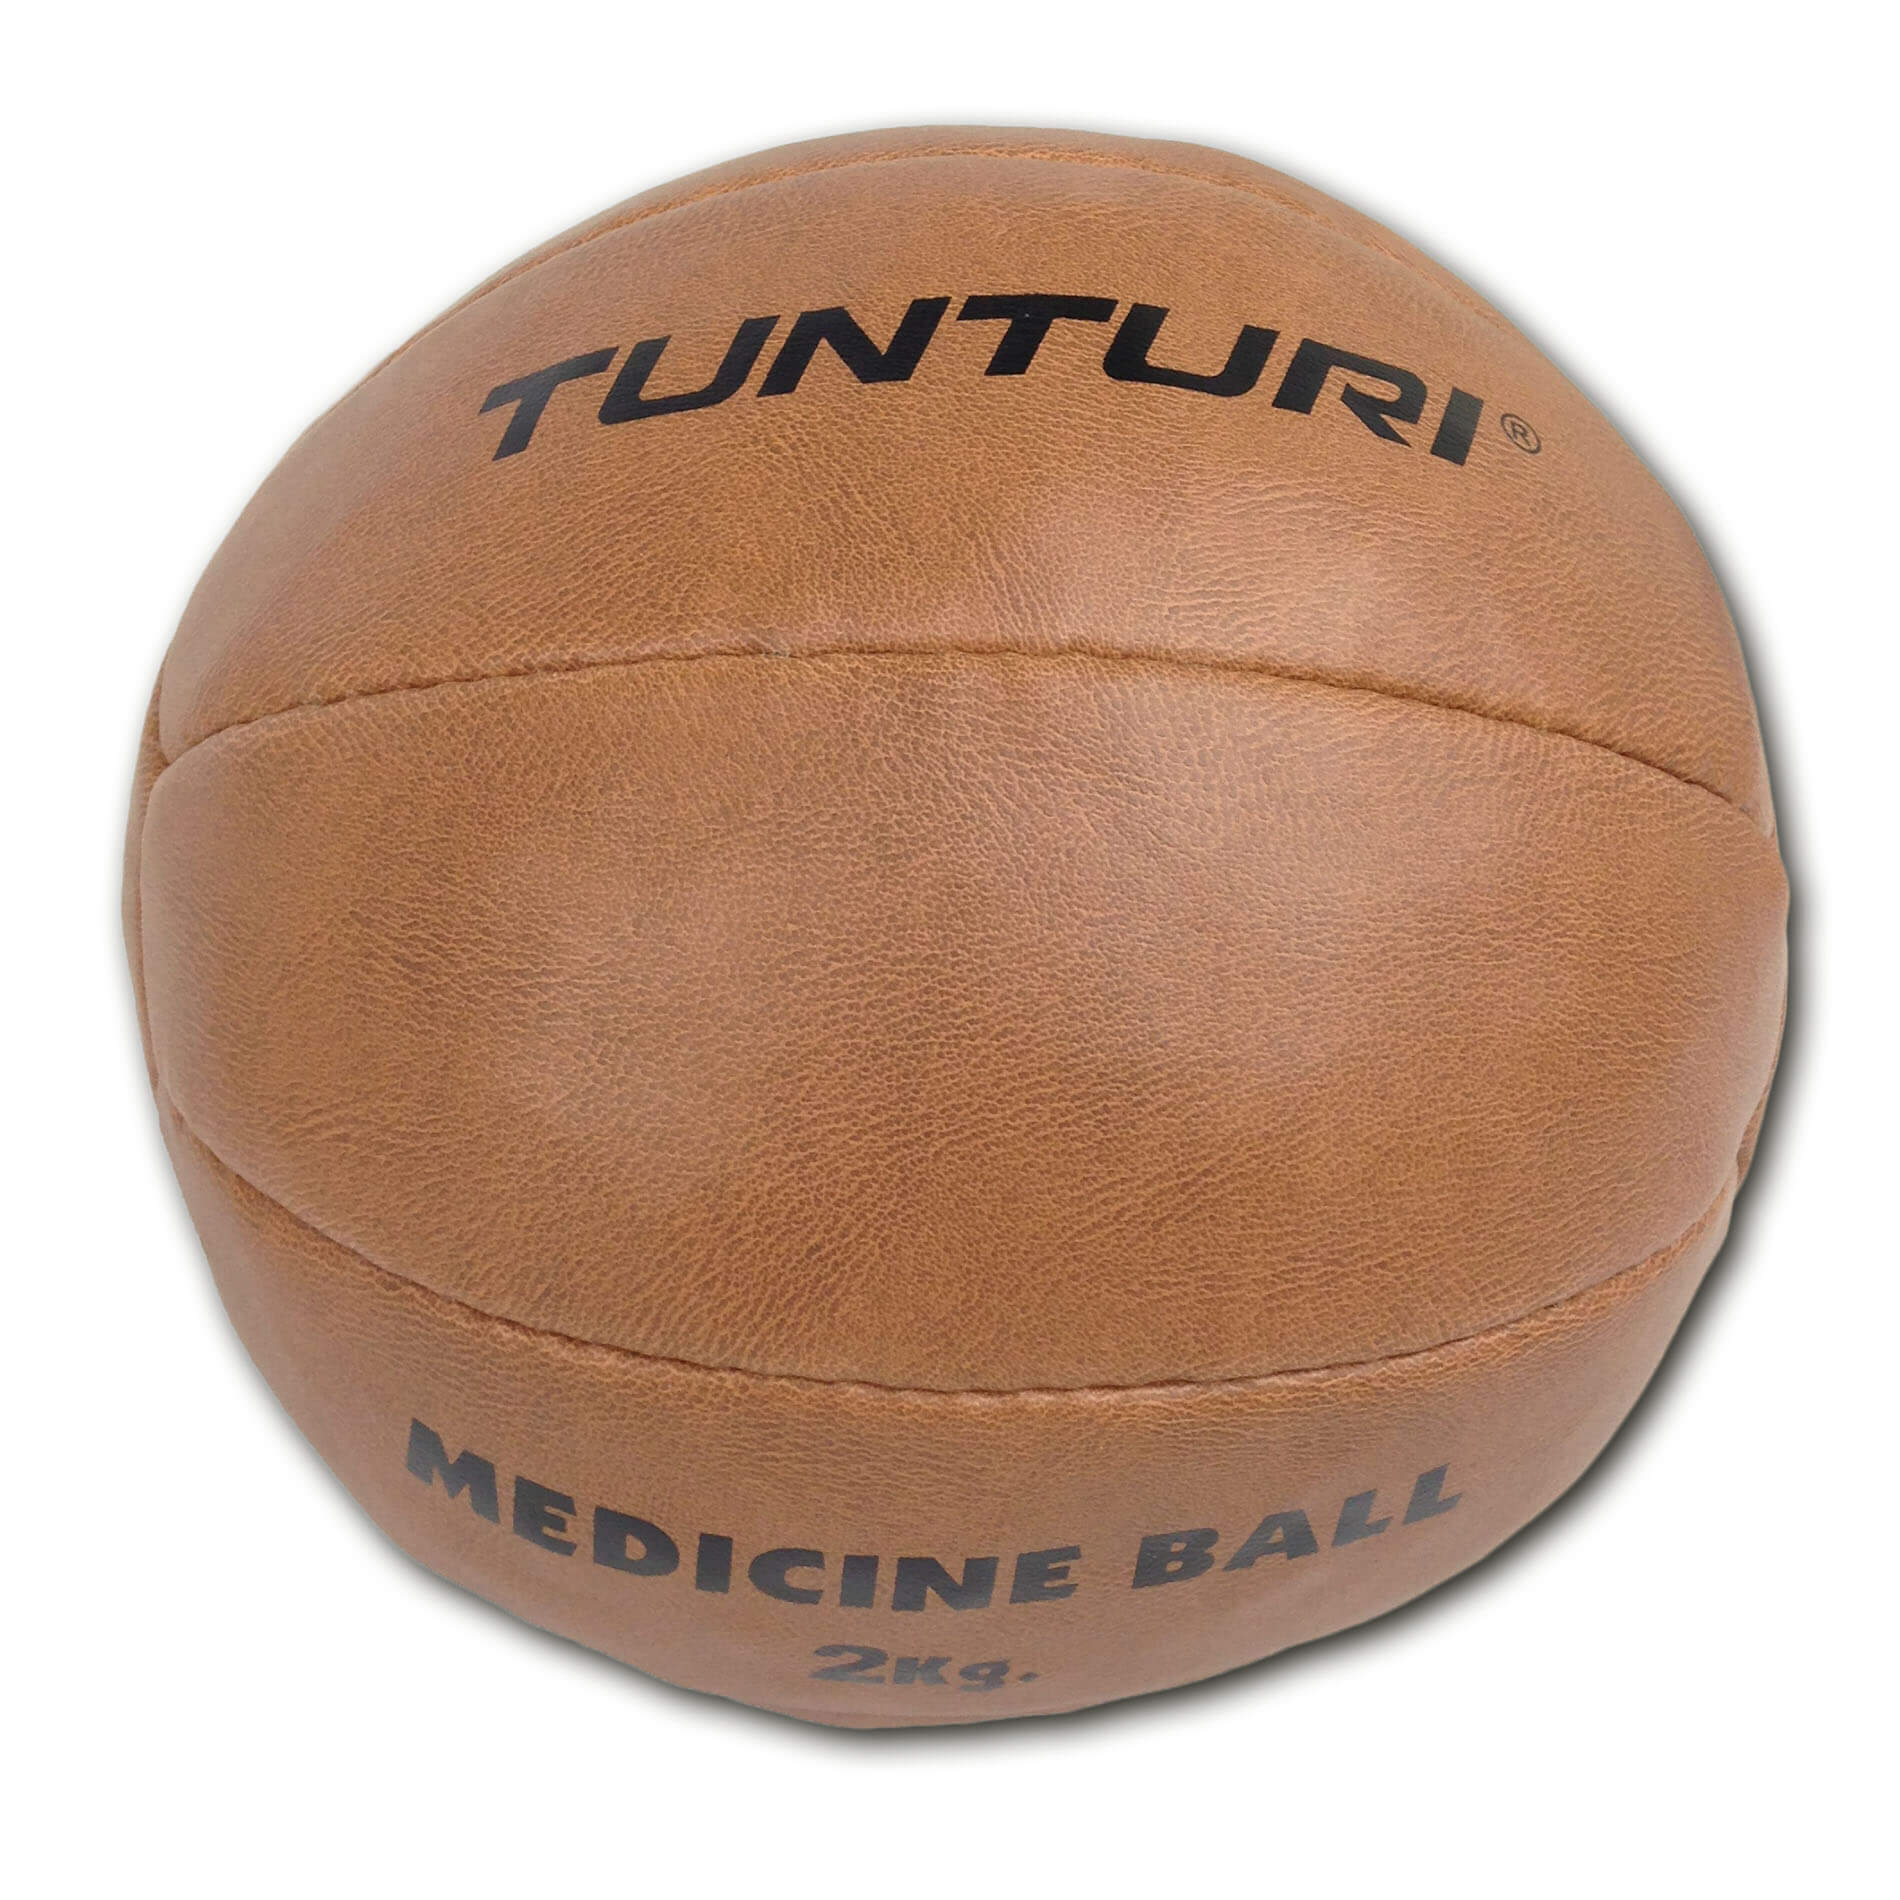 Medicine Ball - Medicijnbal - kunst leer